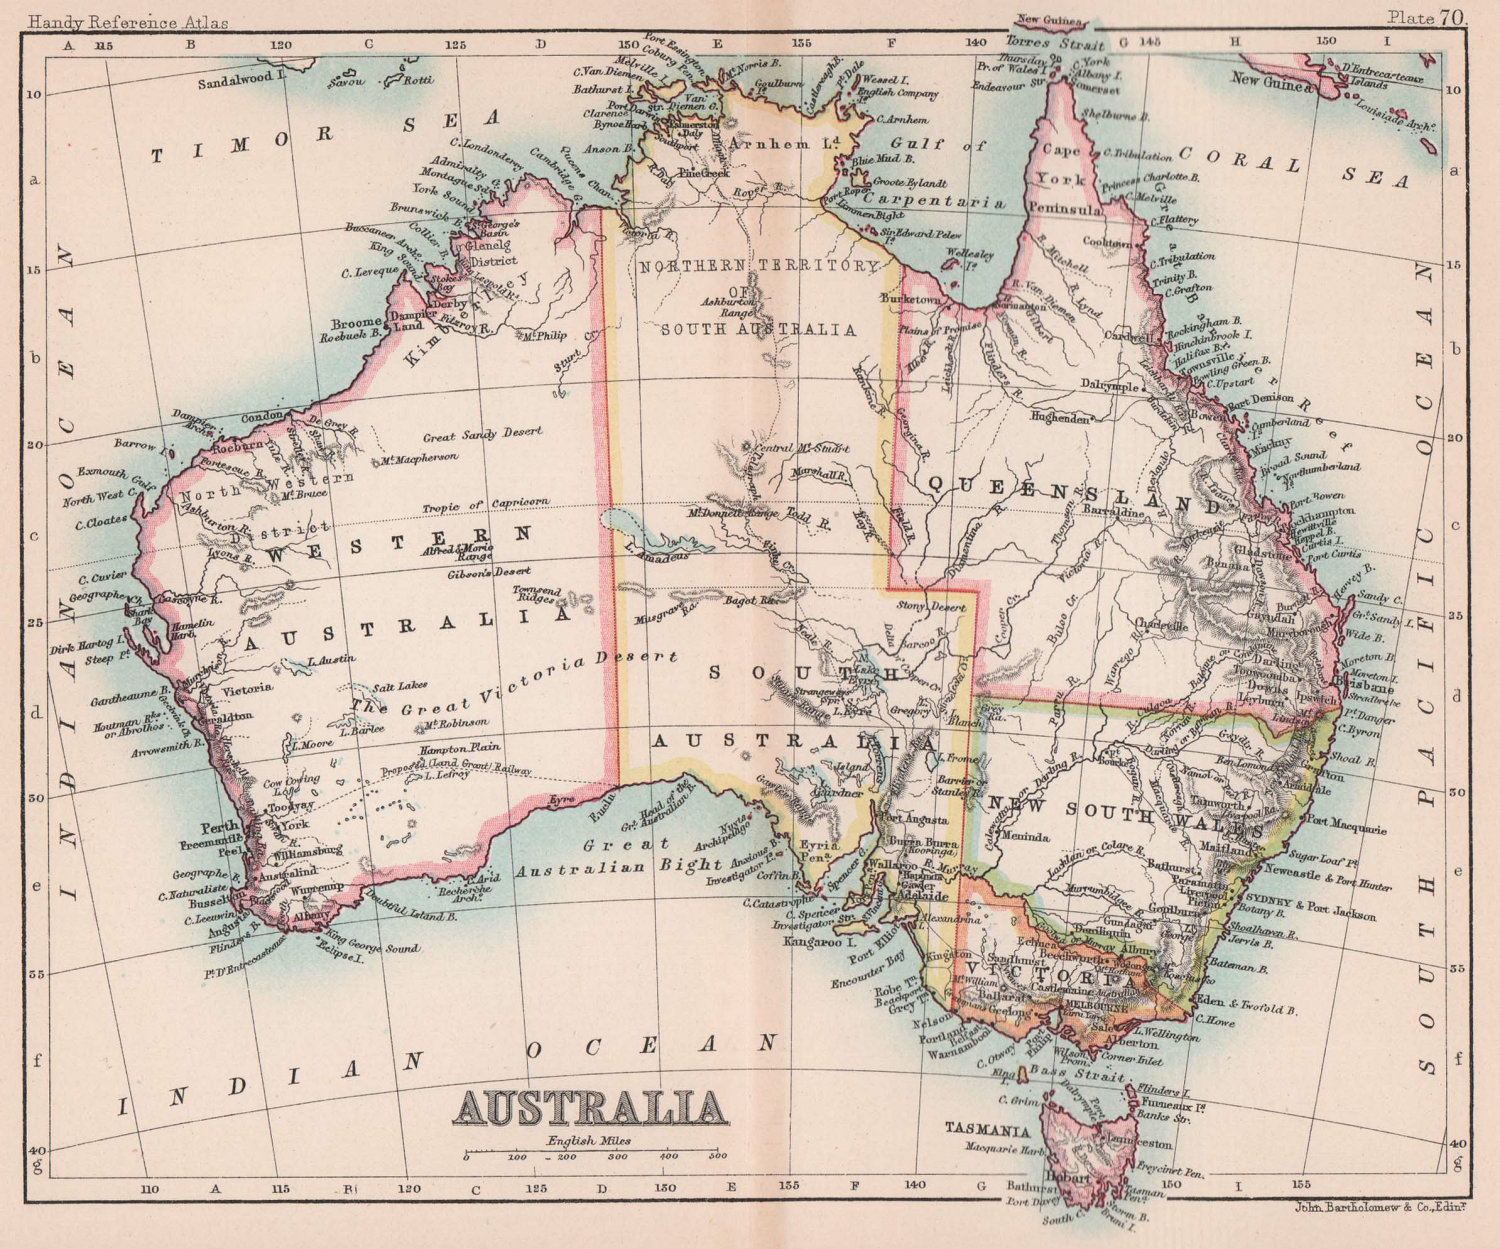 Associate Product Australia. Proposed Land Grant Railway. BARTHOLOMEW 1888 old antique map chart